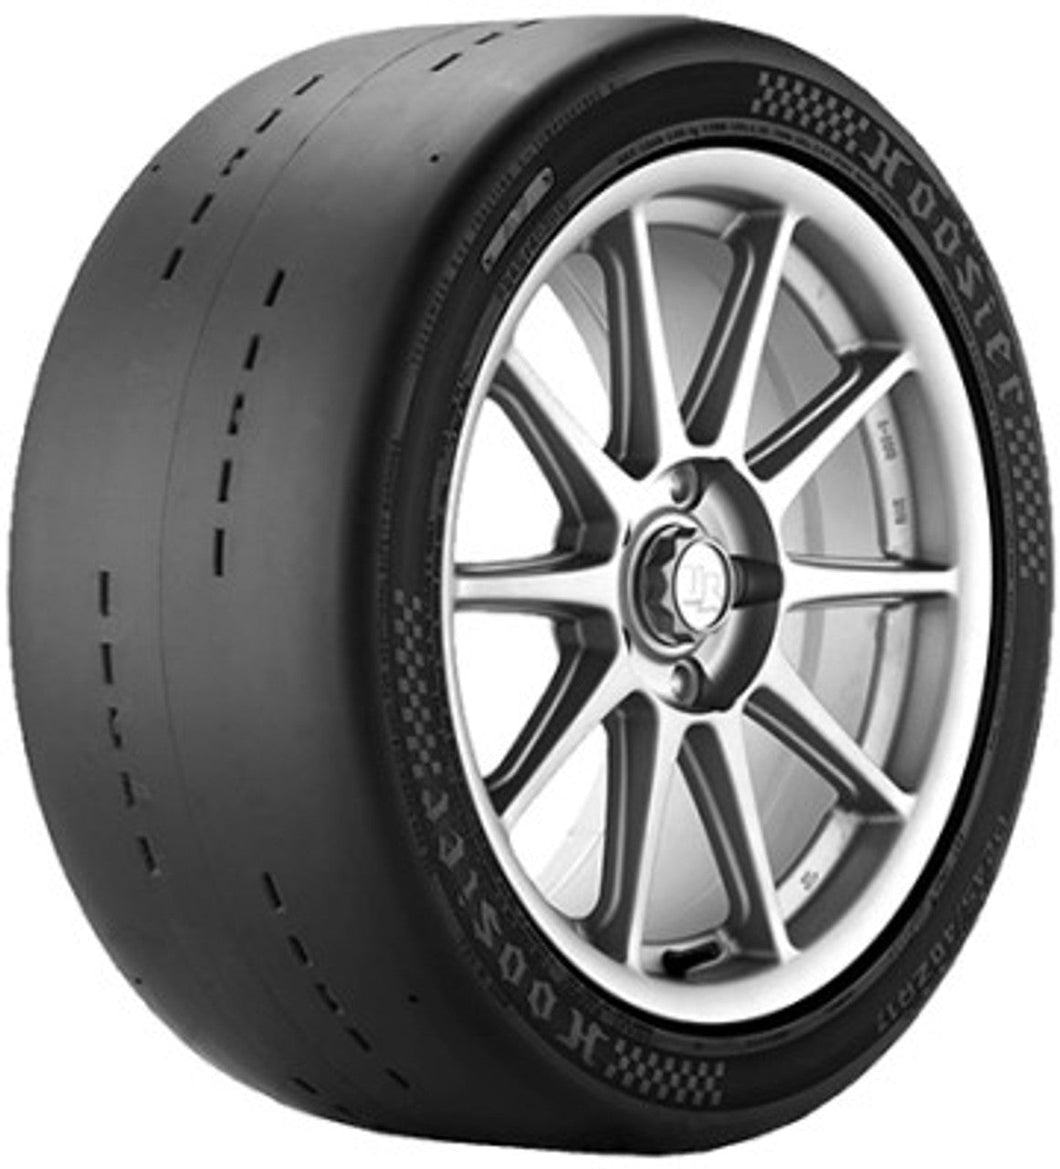 315/40 ZR18 Hoosier Tire Slick D.O.T Neumático